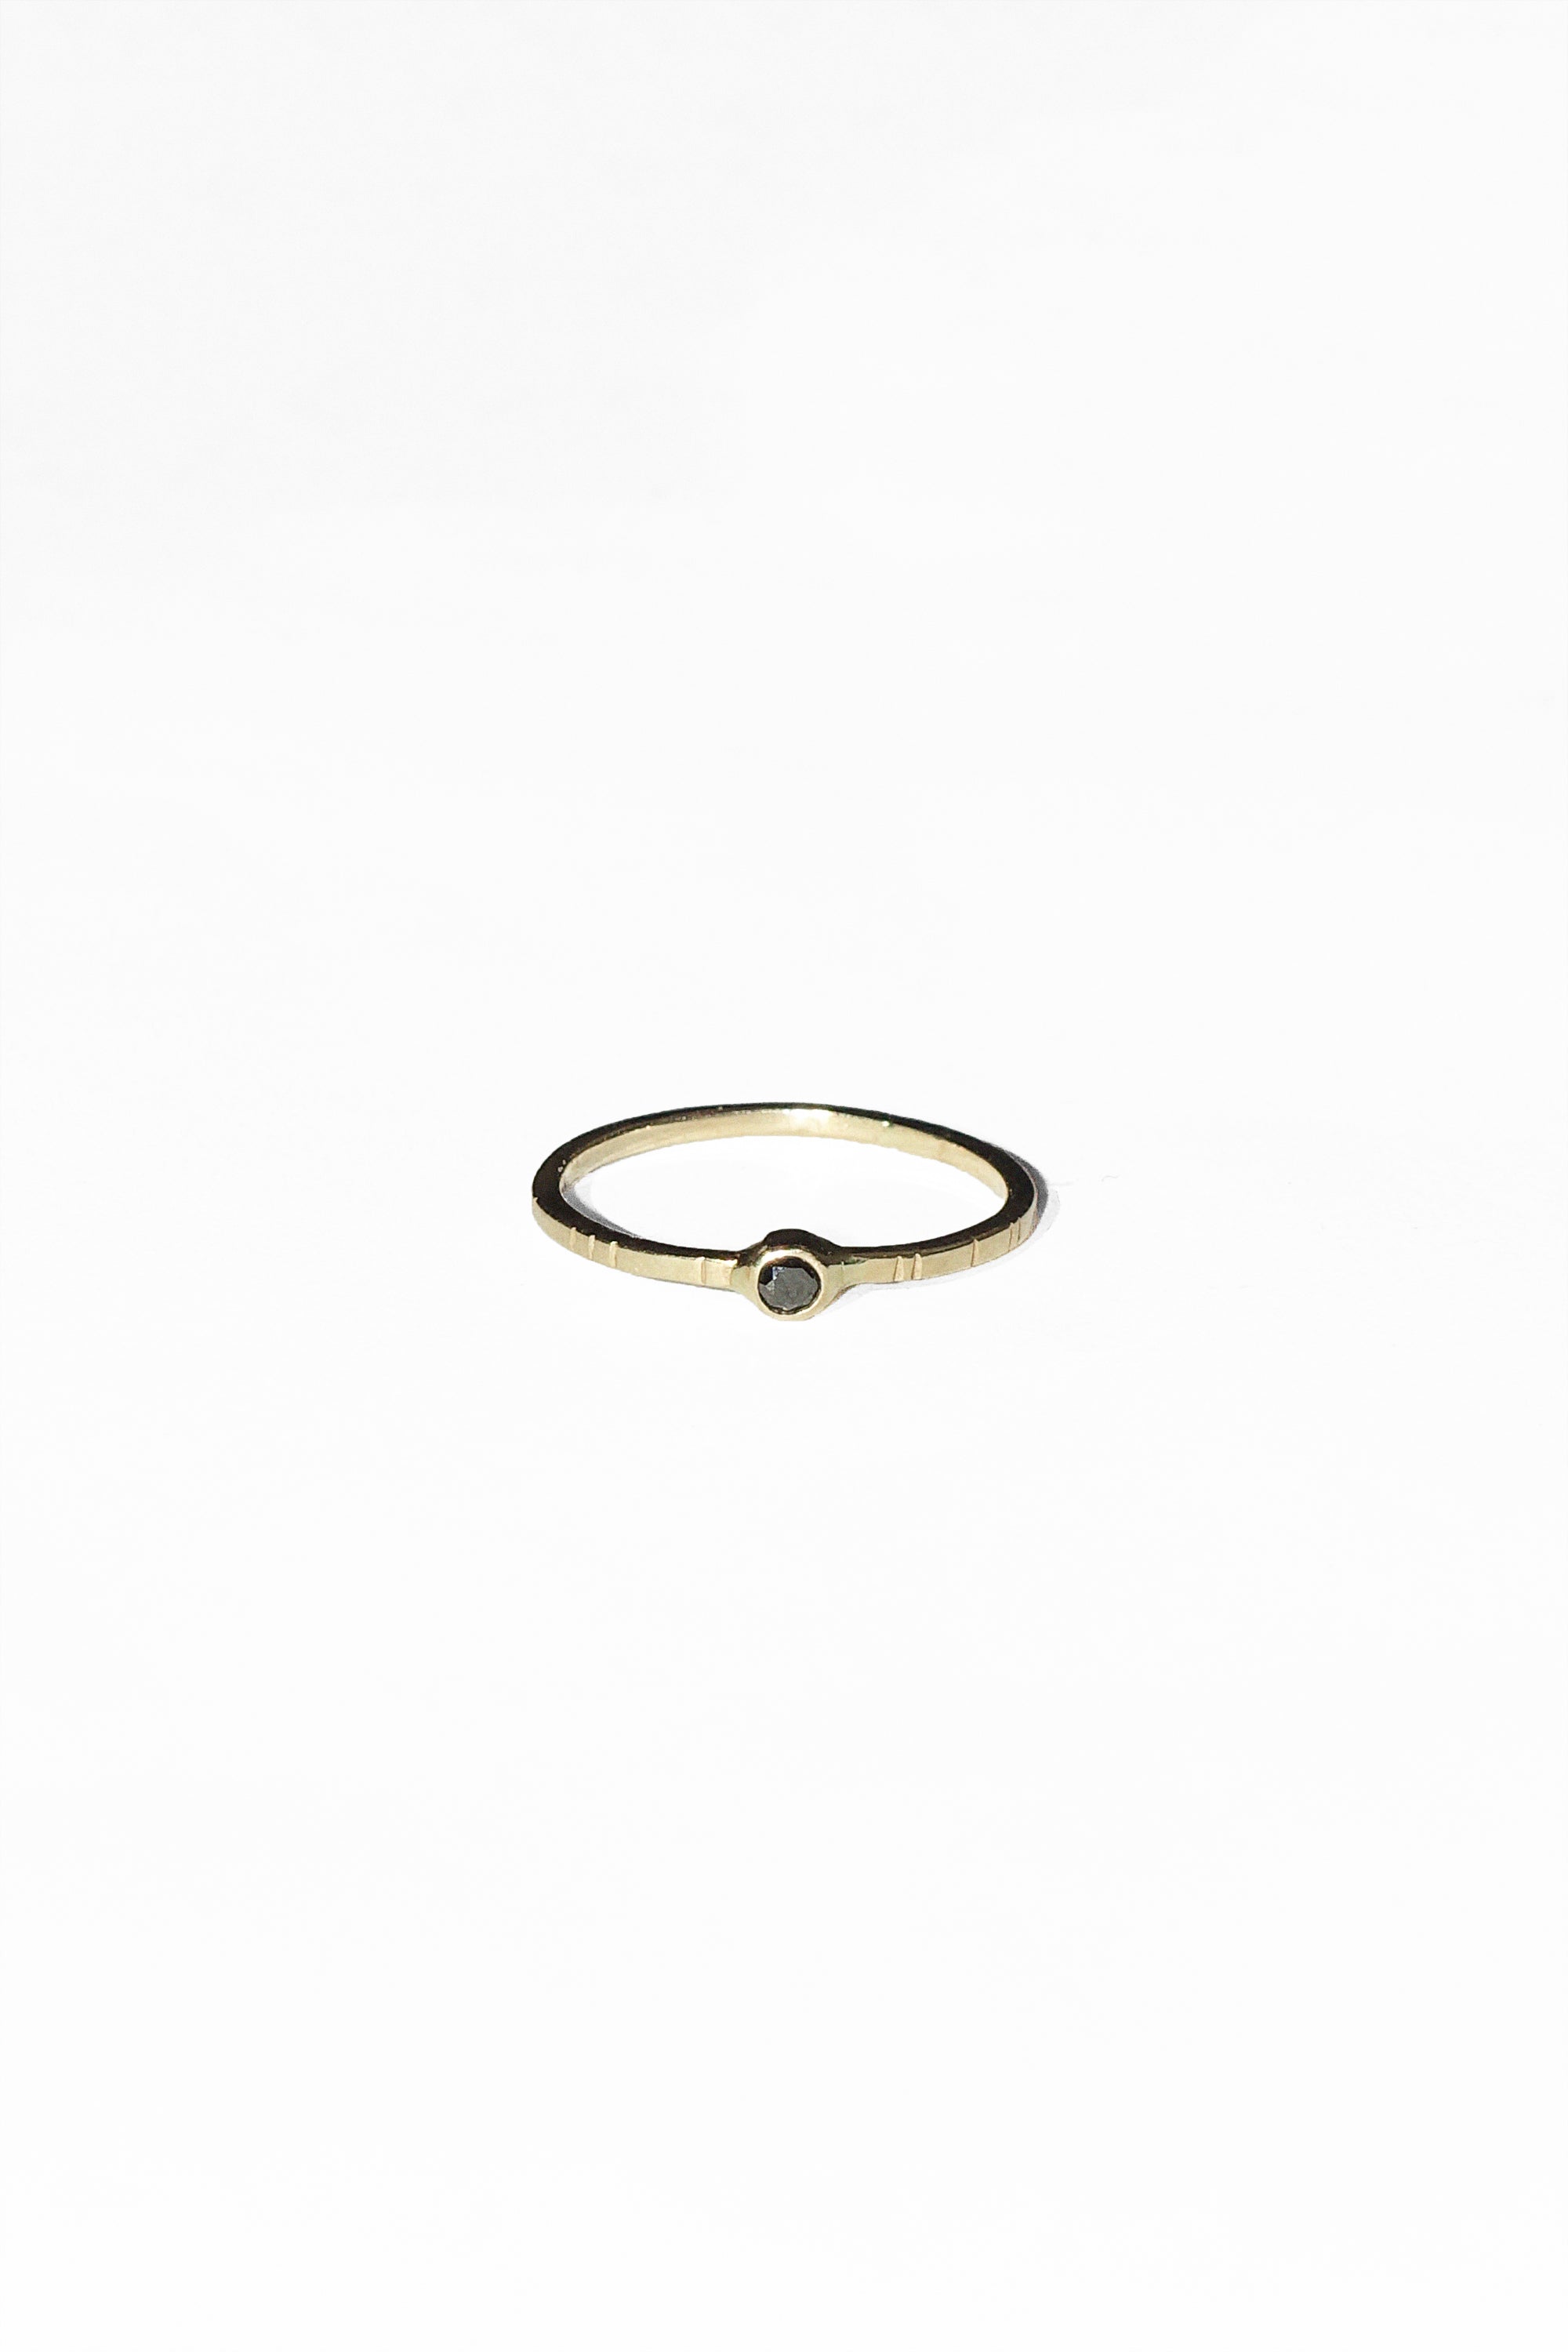 Black Diamond Modelo Ring in 14k Yellow Gold